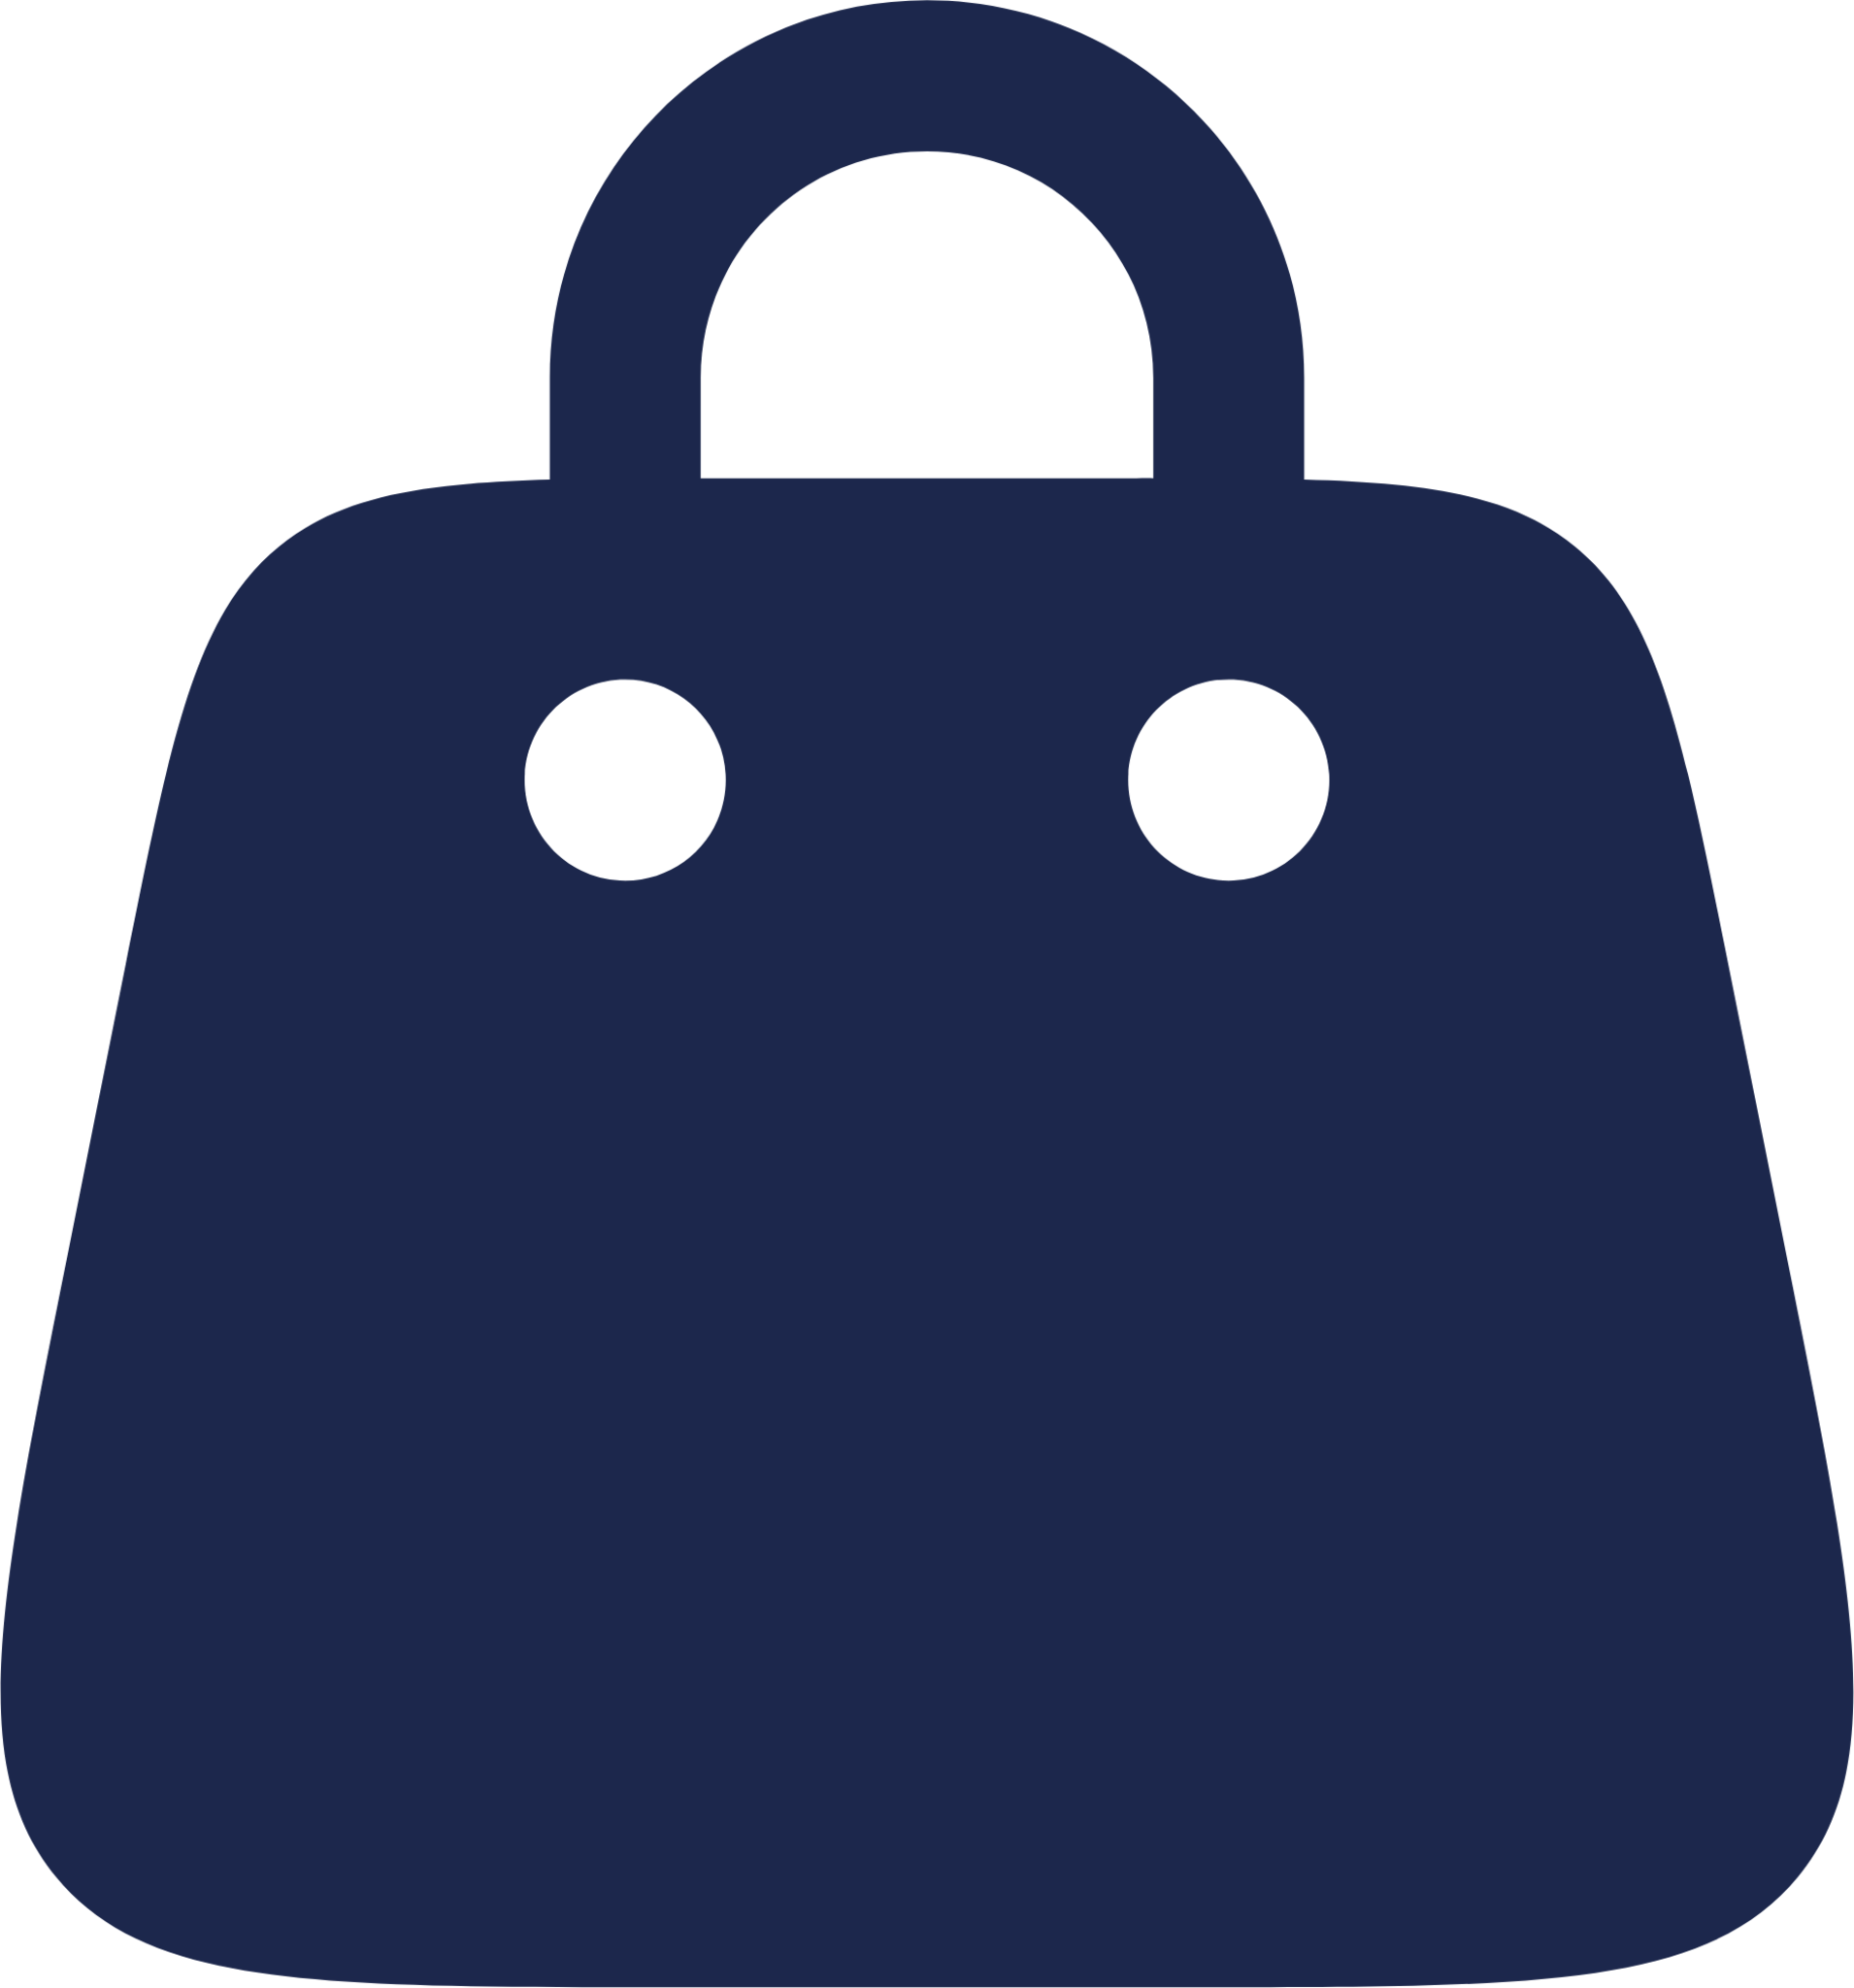 Bag 4 icon